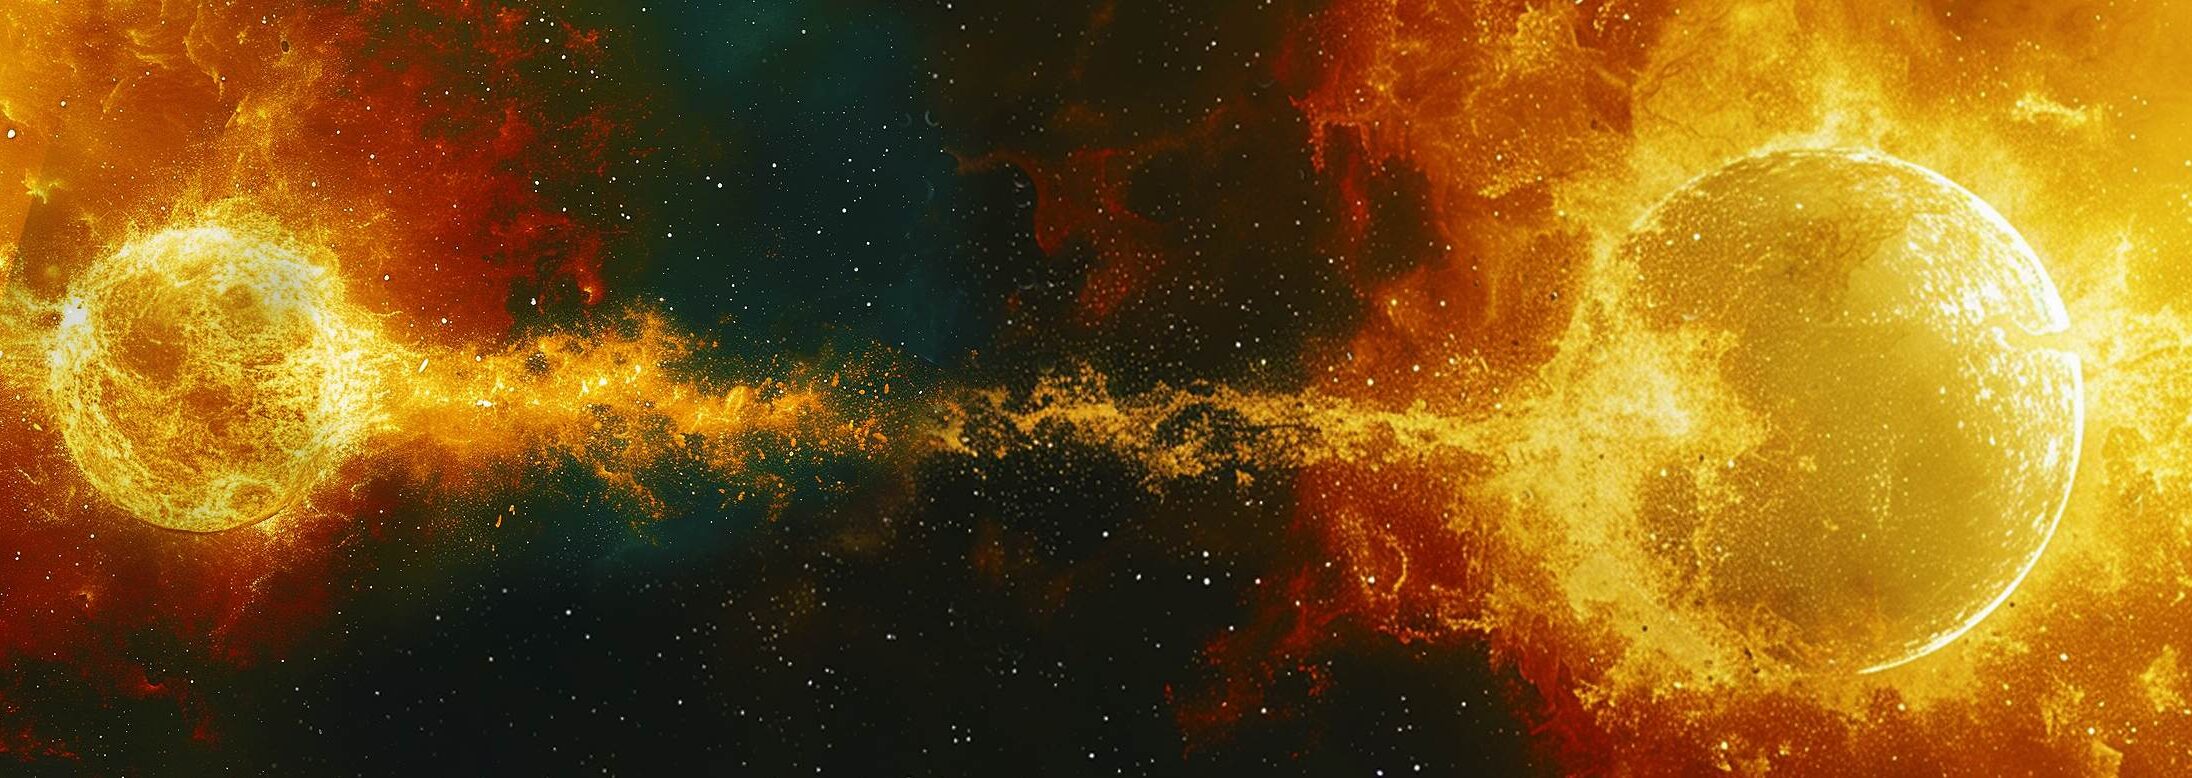 Nova Explosion in Binary Star System